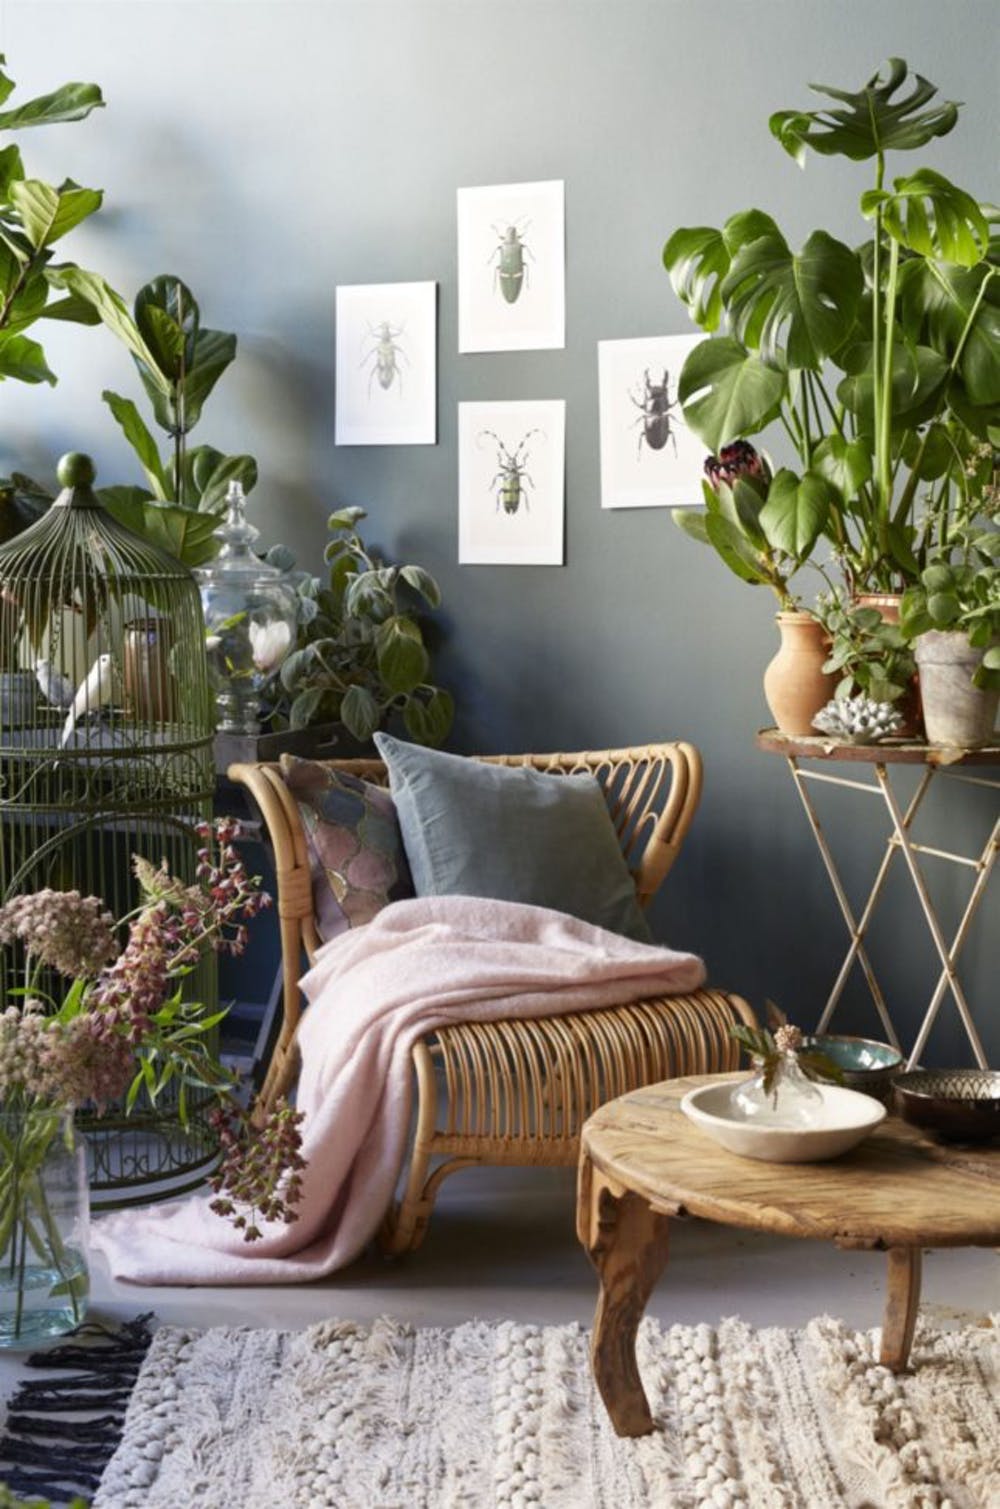 Urban Jungle | Design Inspiration | Decorating With Plants